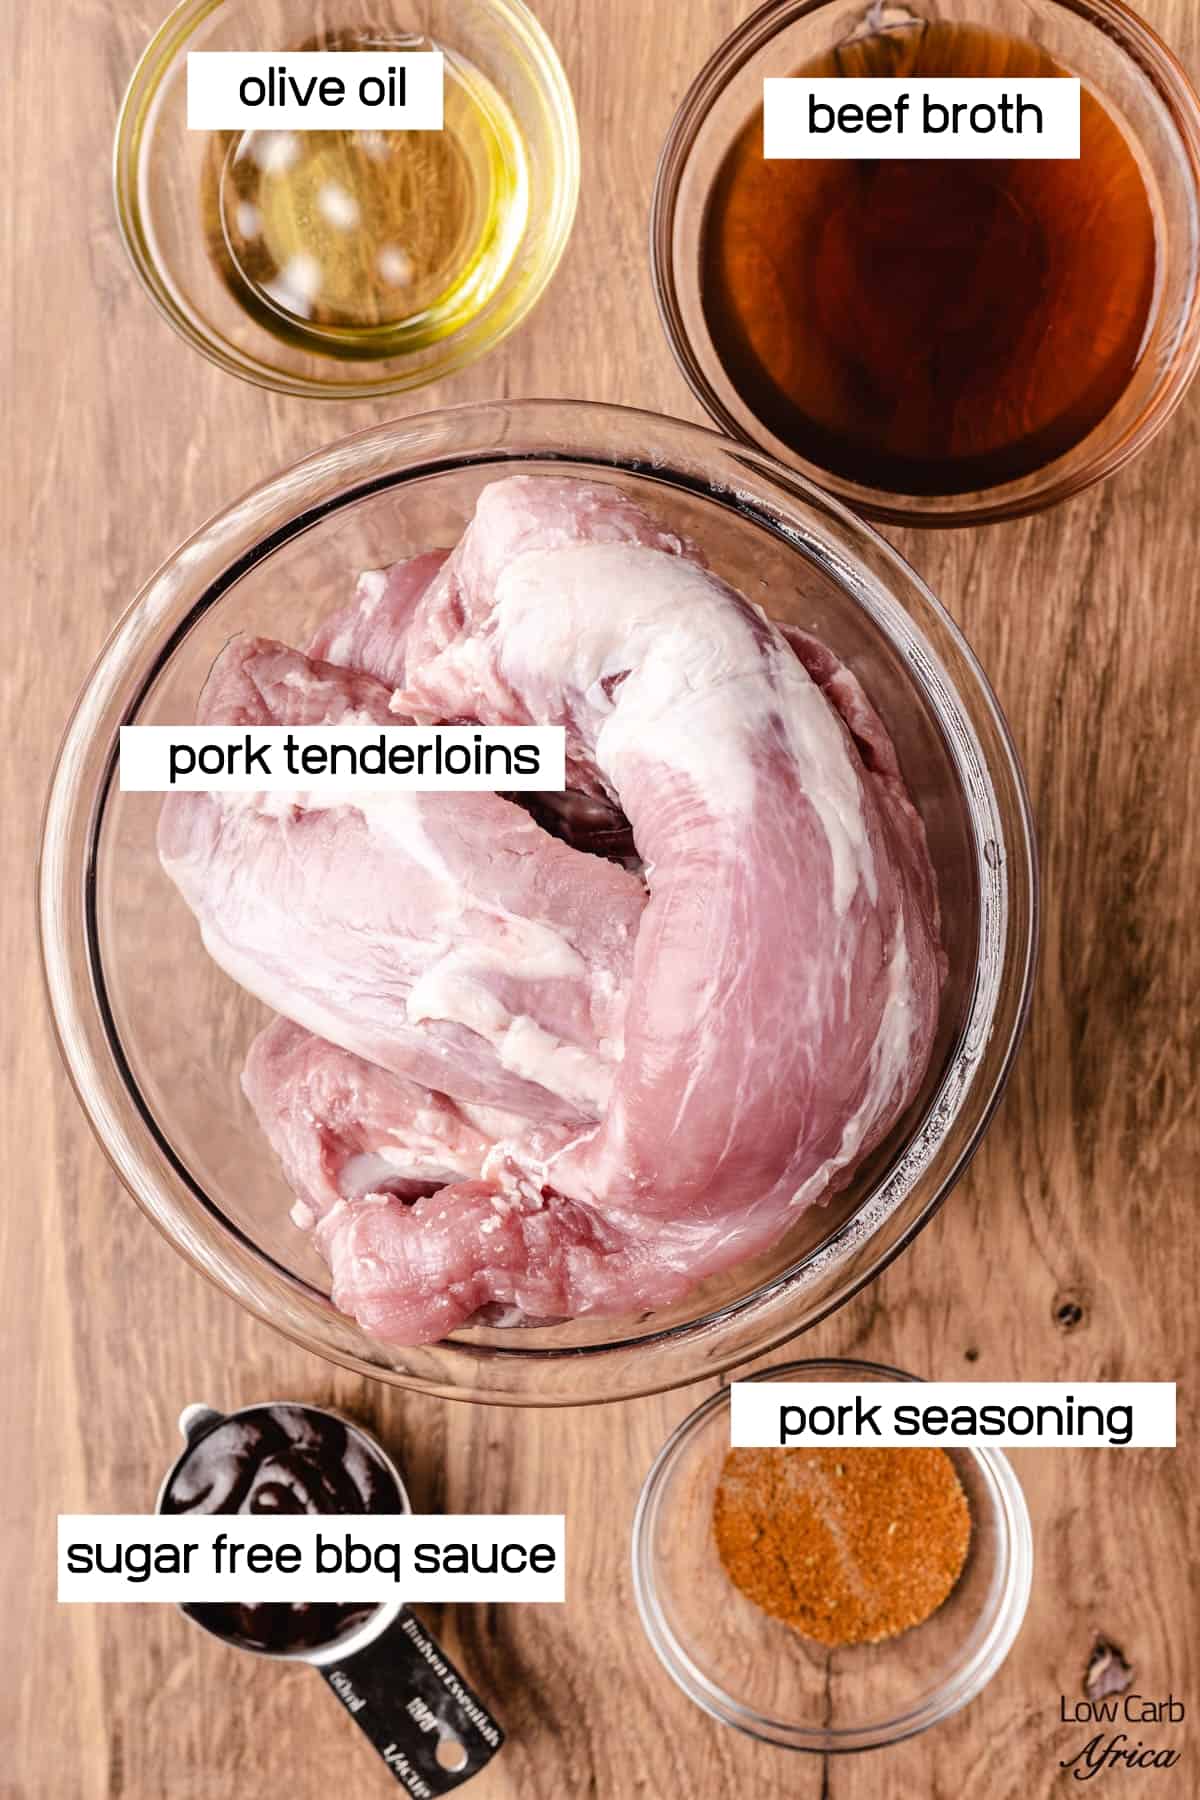 Ingredients for making pork belly